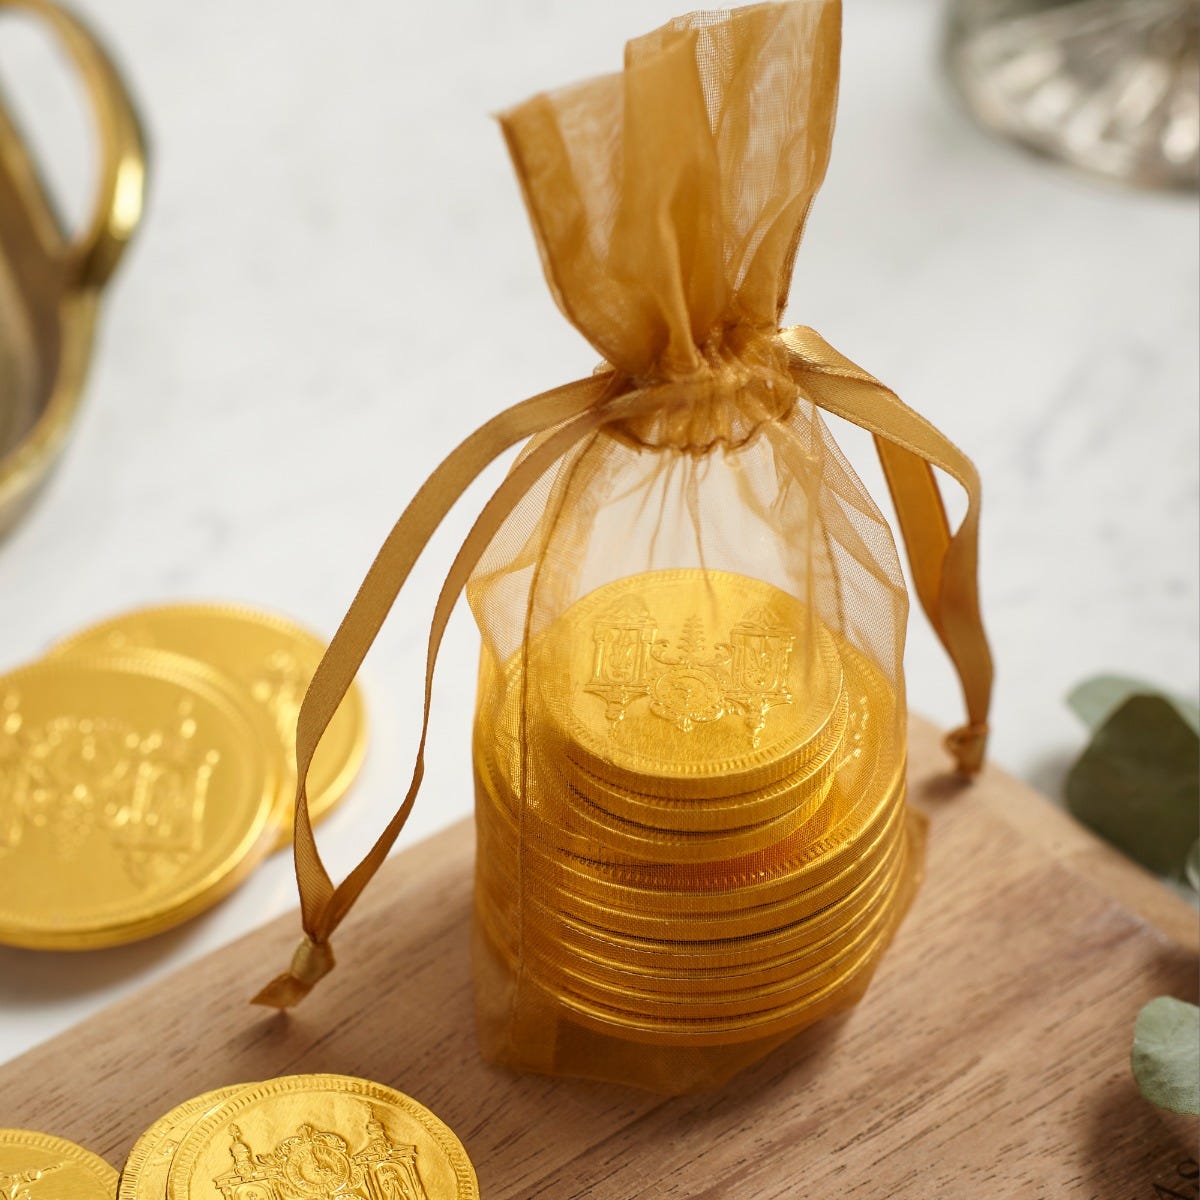 Chocolate Gold Coins, 100g, Fortnum & Mason